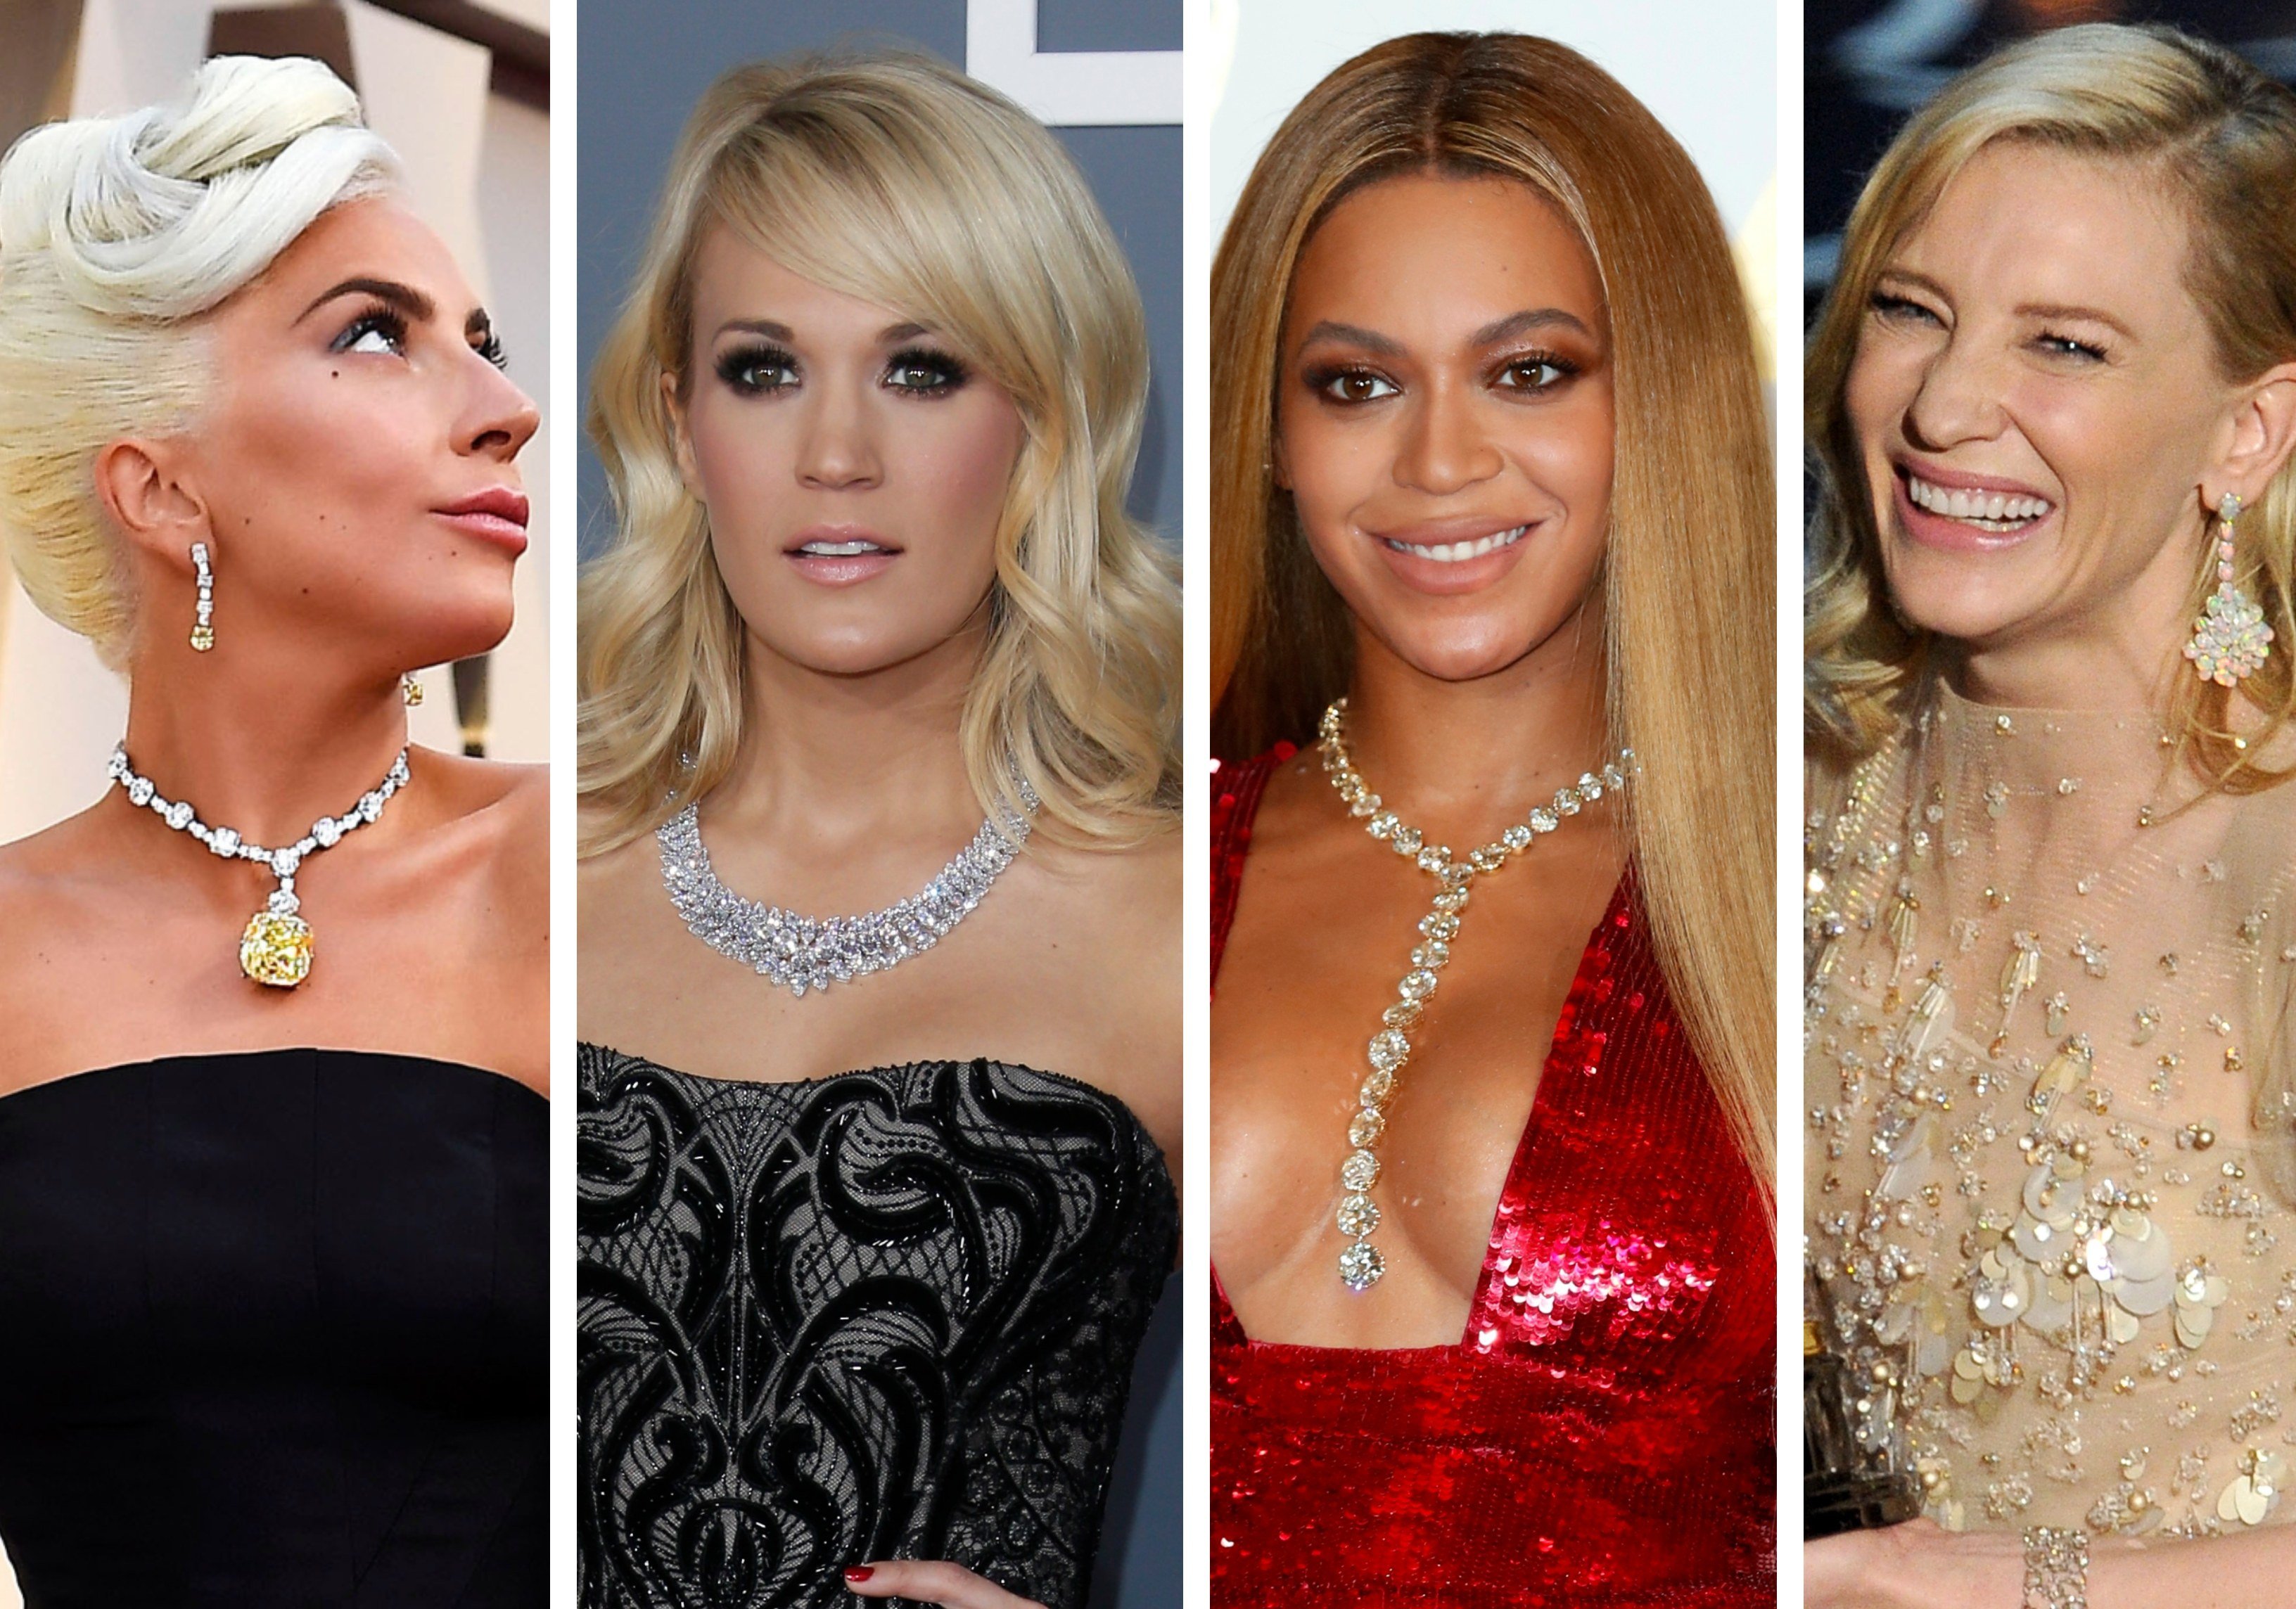 Biggest bridal jewellery trends according to celebrities like